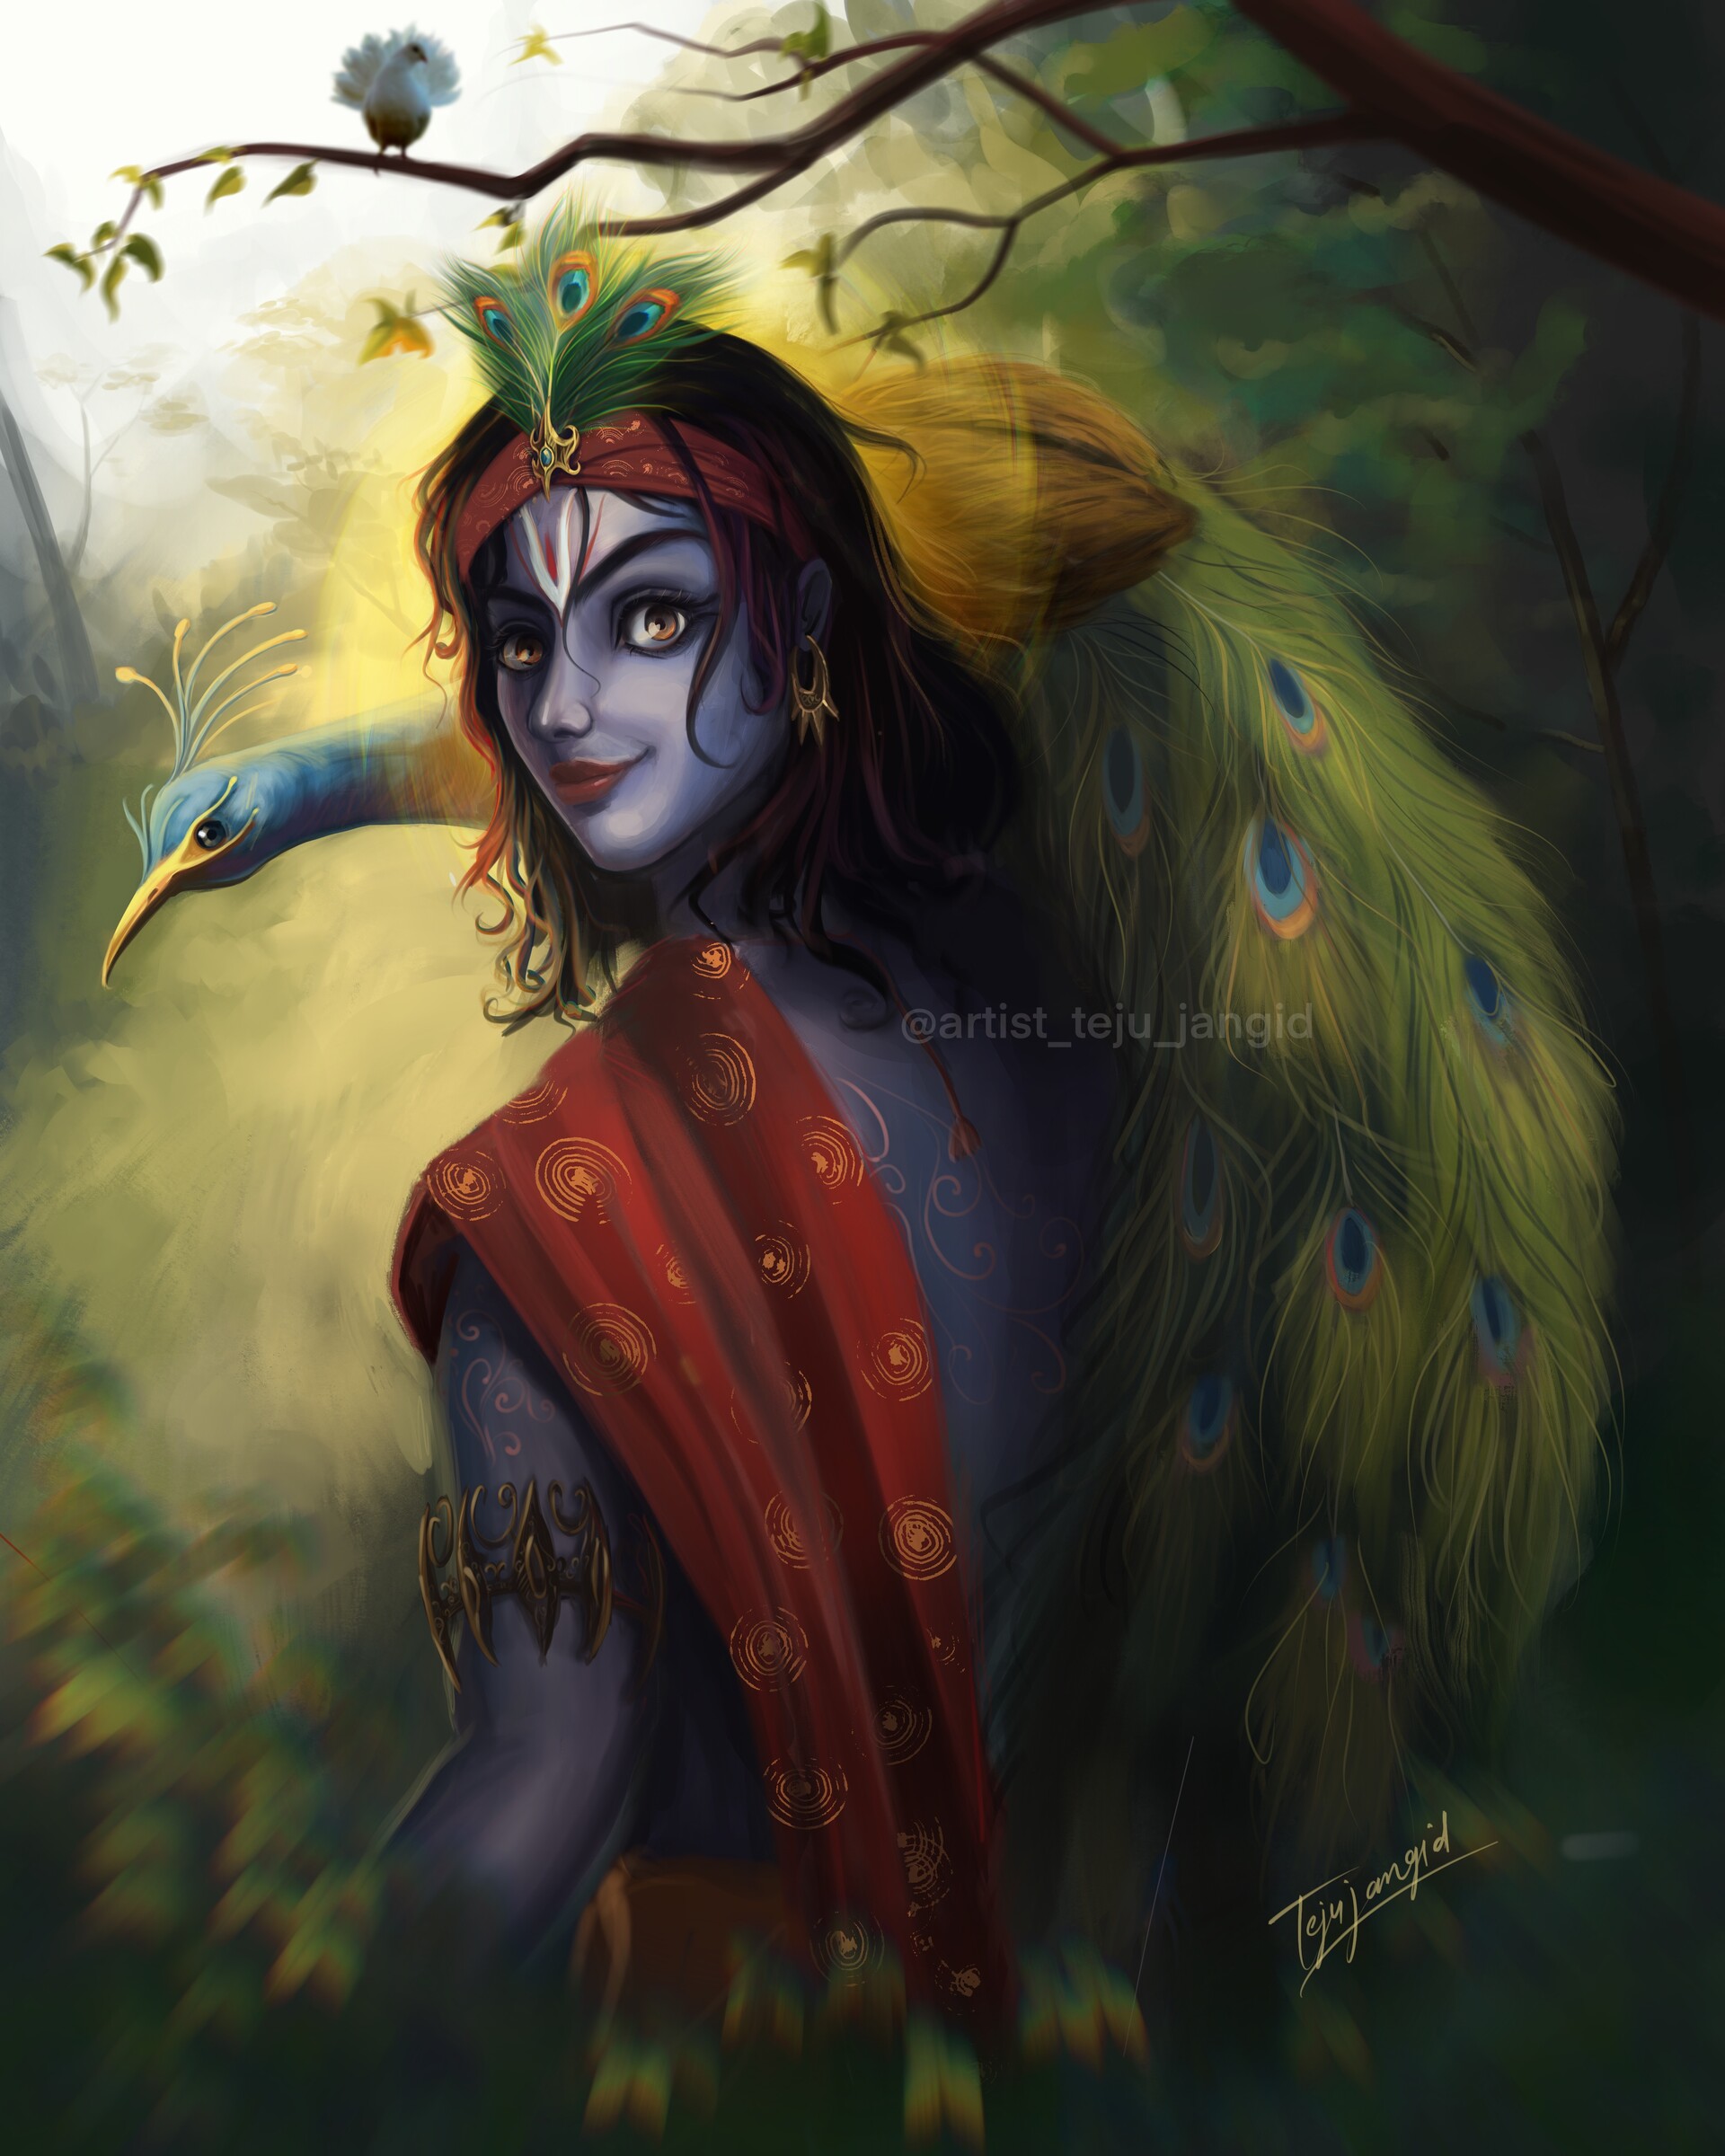 teju jangid - Krishna with peacock